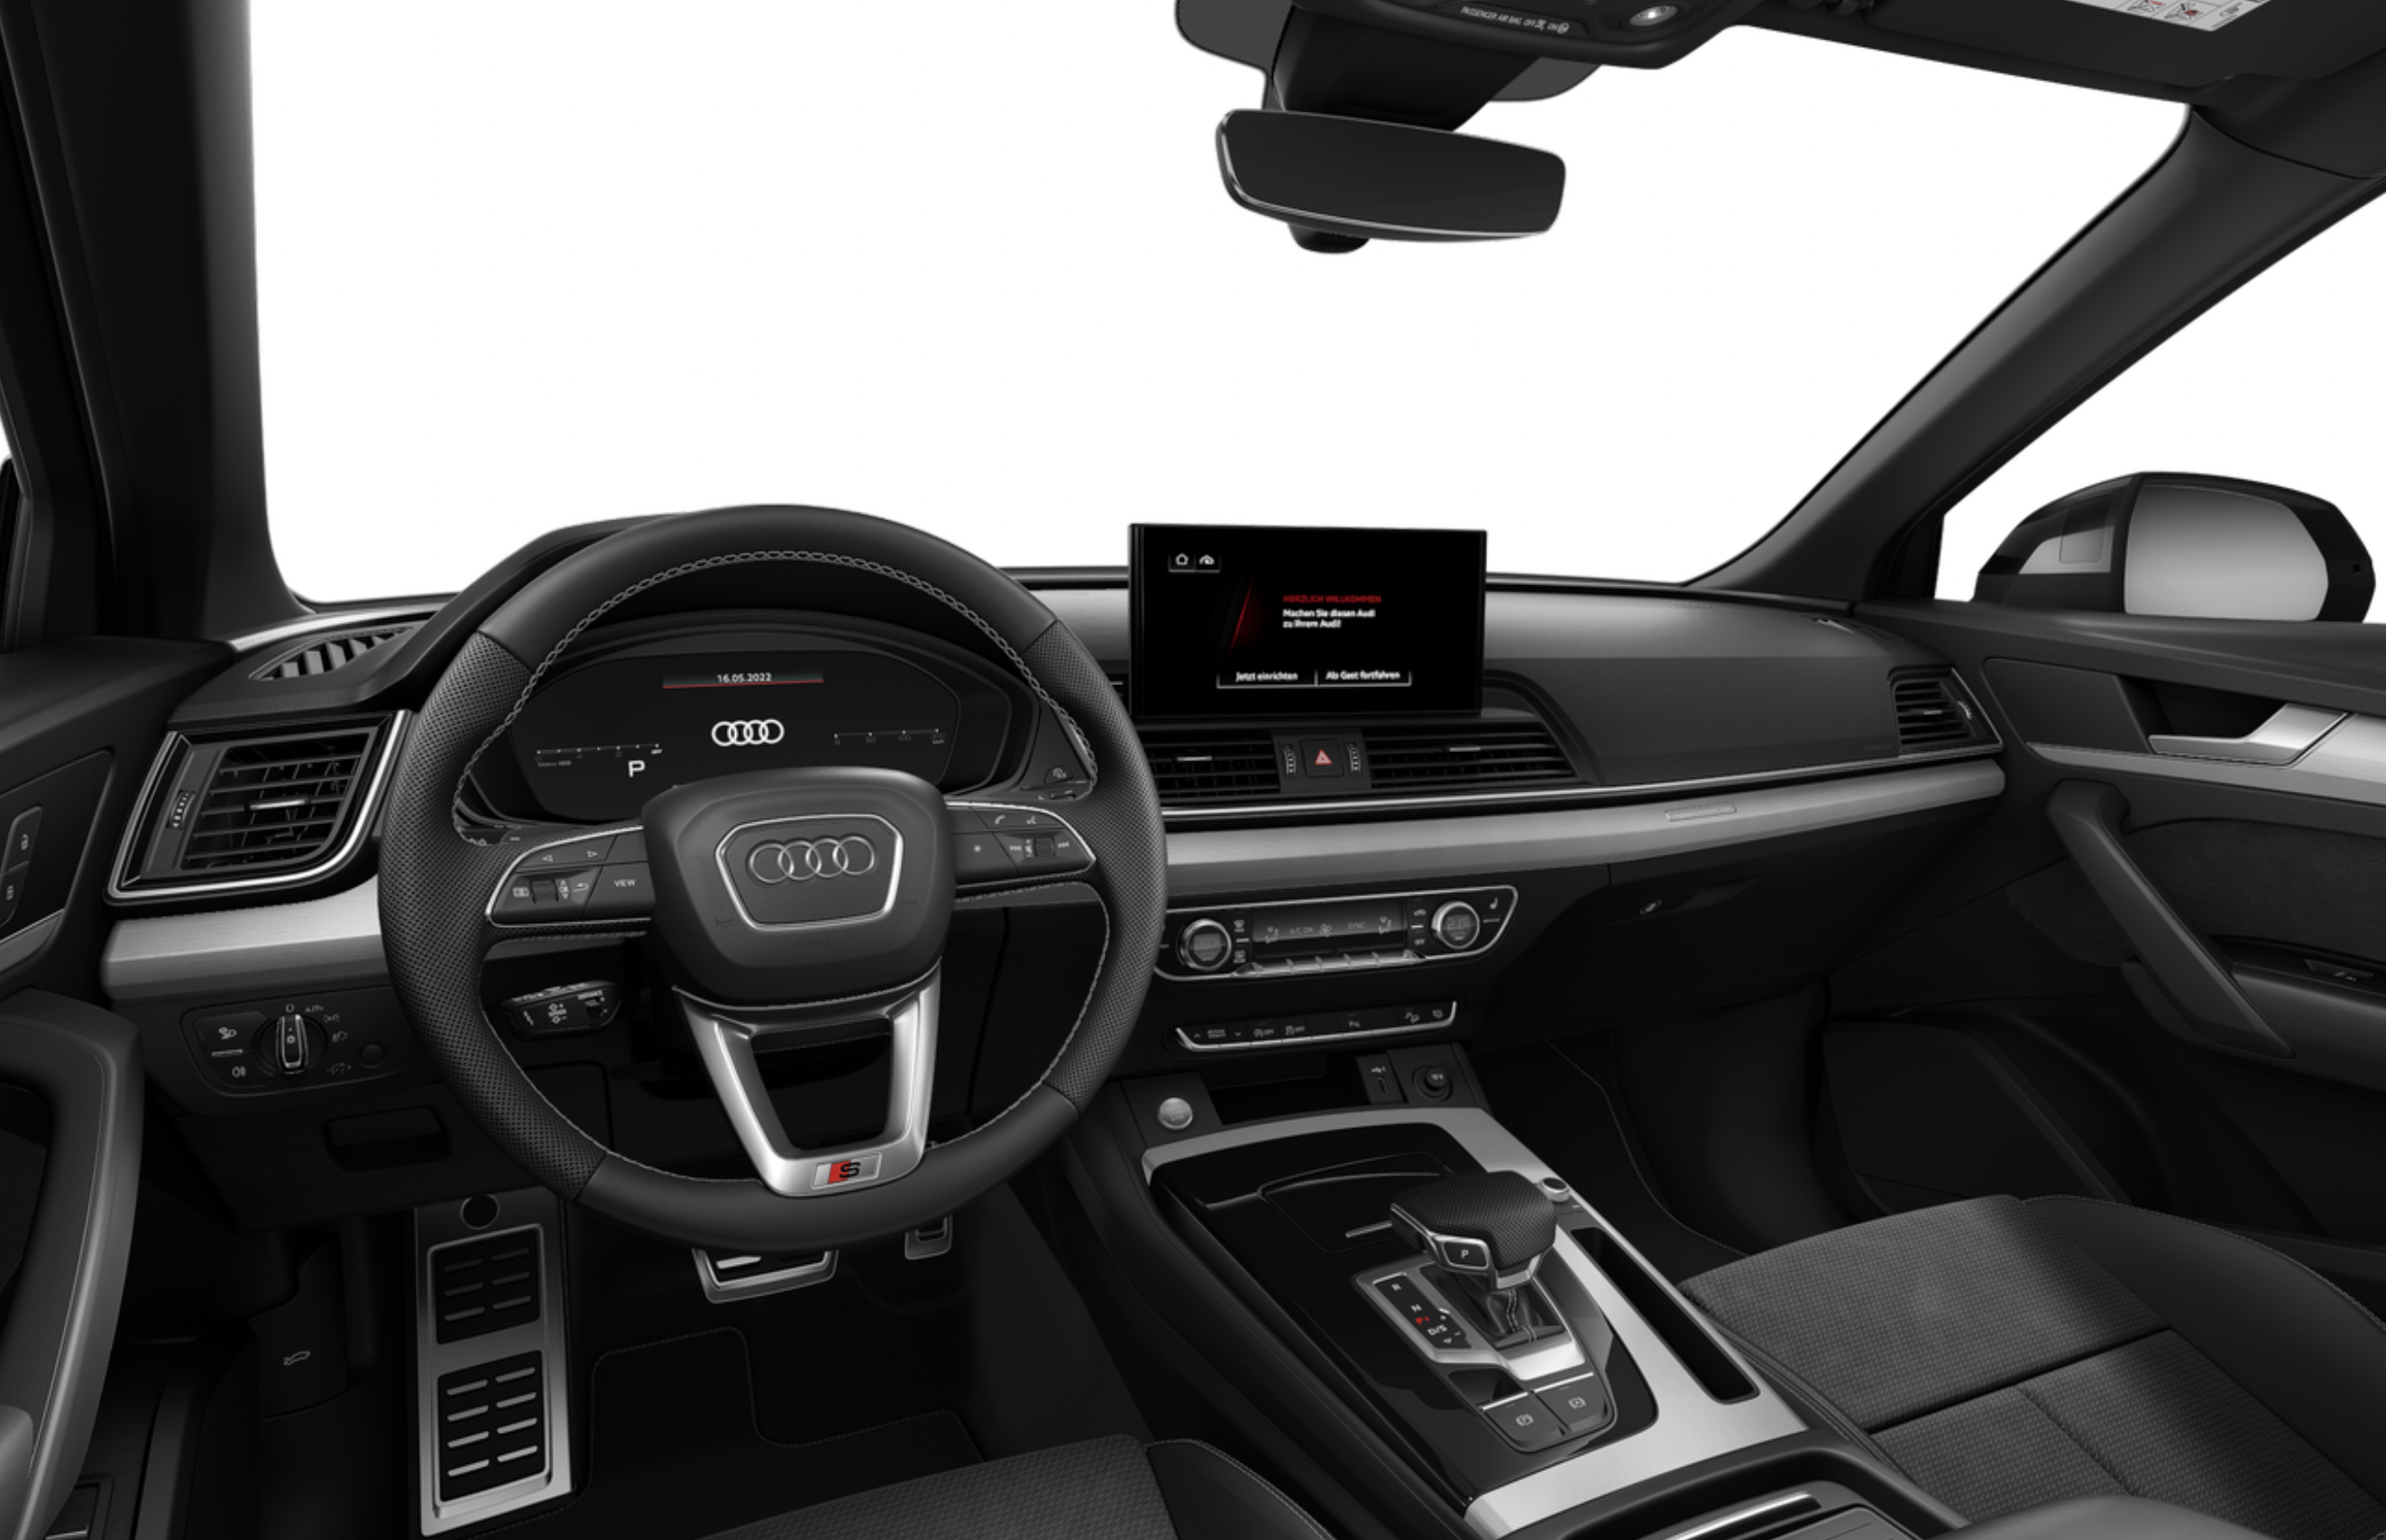 Audi Q5 40 TDI quattro S-tronic S-line | nové auto skladem | naftové SUV v perfektní výbavě  za super cenu | nákup online na AUTOiBUY.com